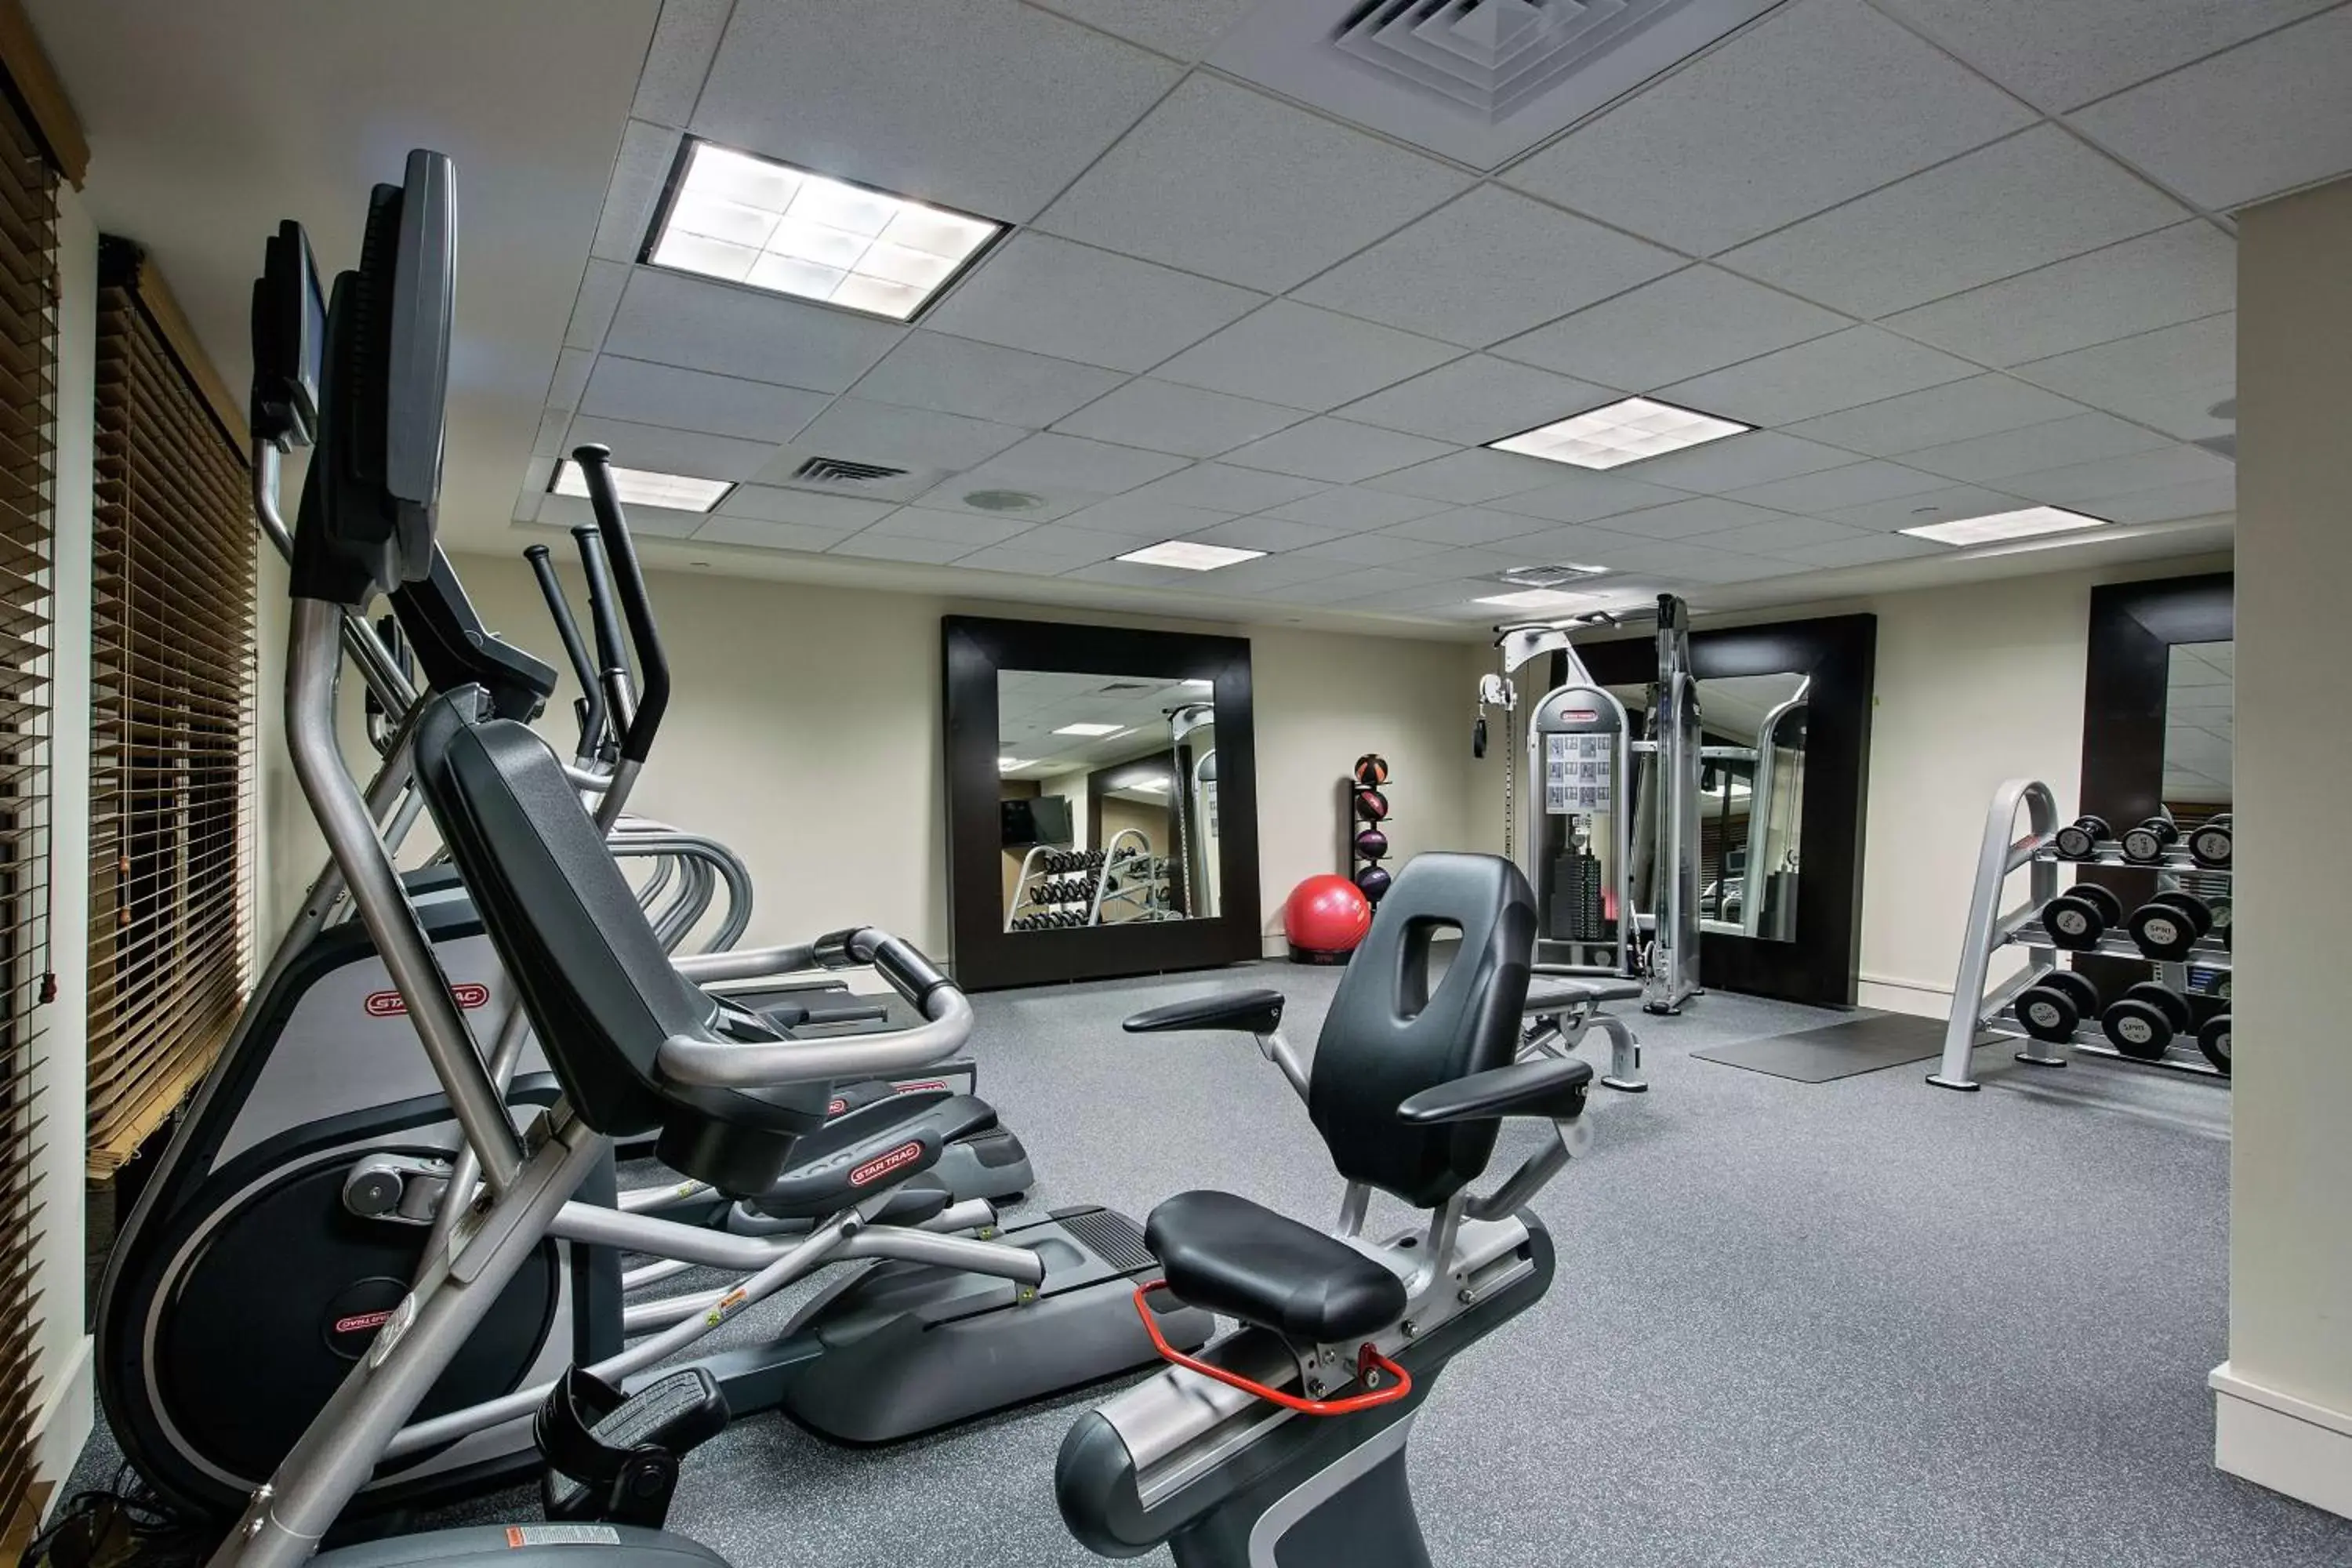 Fitness centre/facilities, Fitness Center/Facilities in Hilton Garden Inn Lincoln Downtown/Haymarket